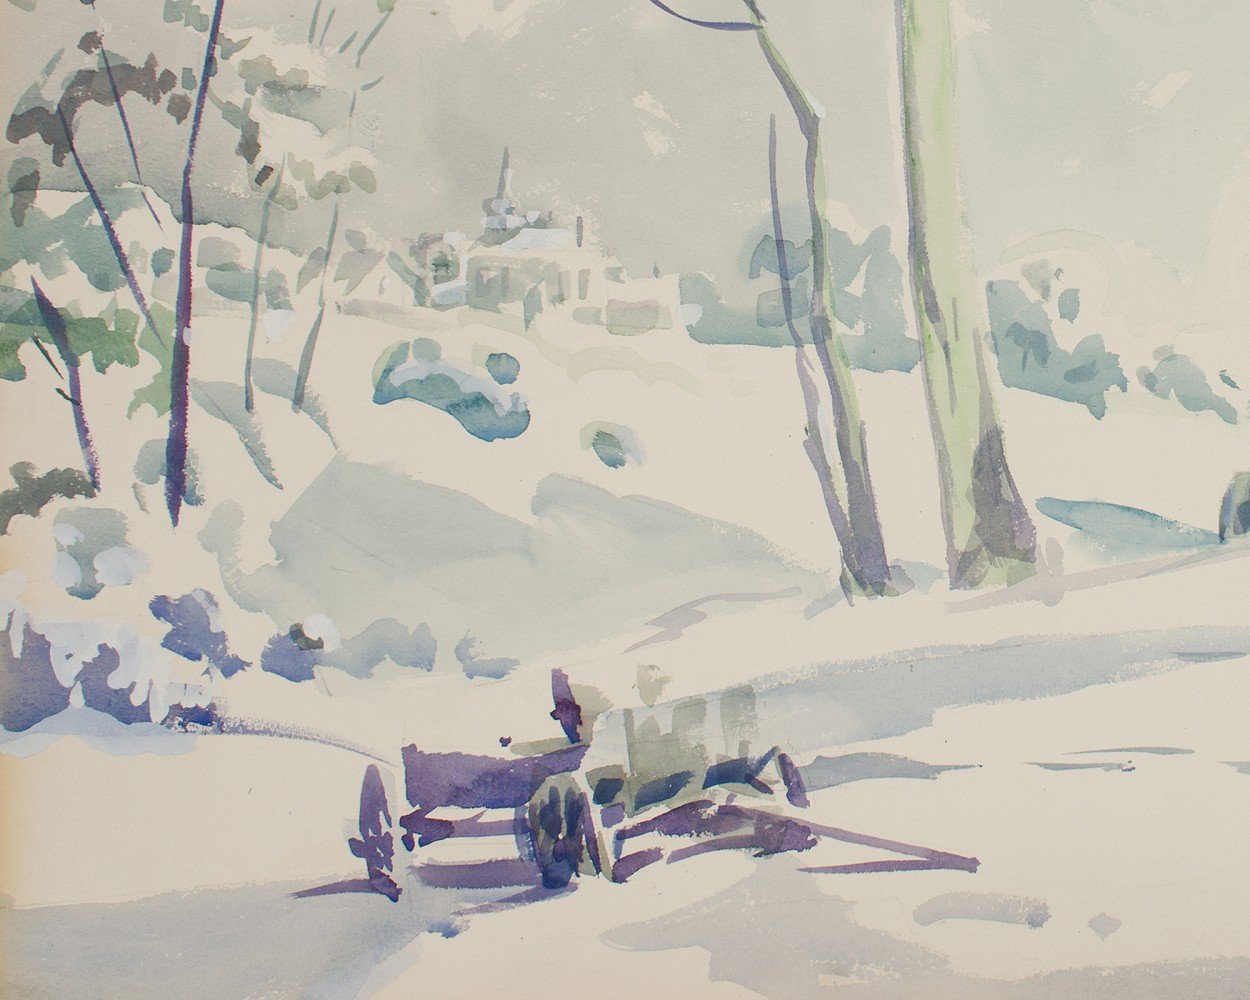 Landscape Watercolor on Whatman Board Painting: 